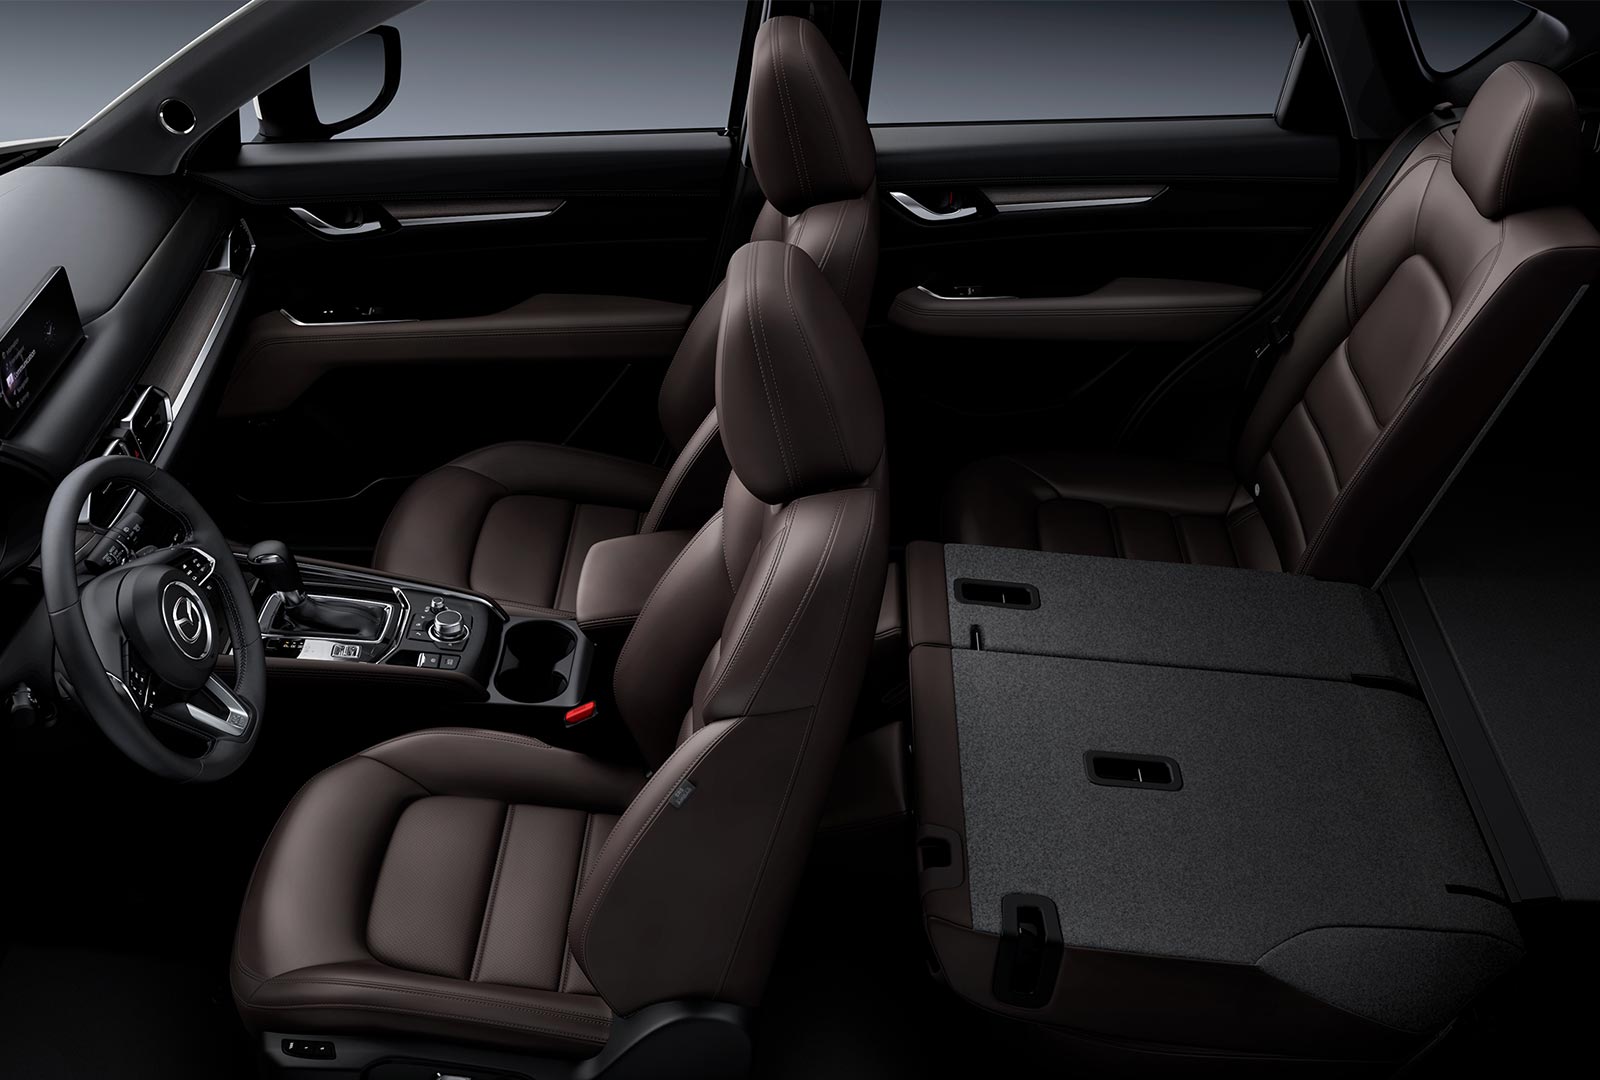 Mazda CX-5 cockpit showing seats and HMI Commander console.